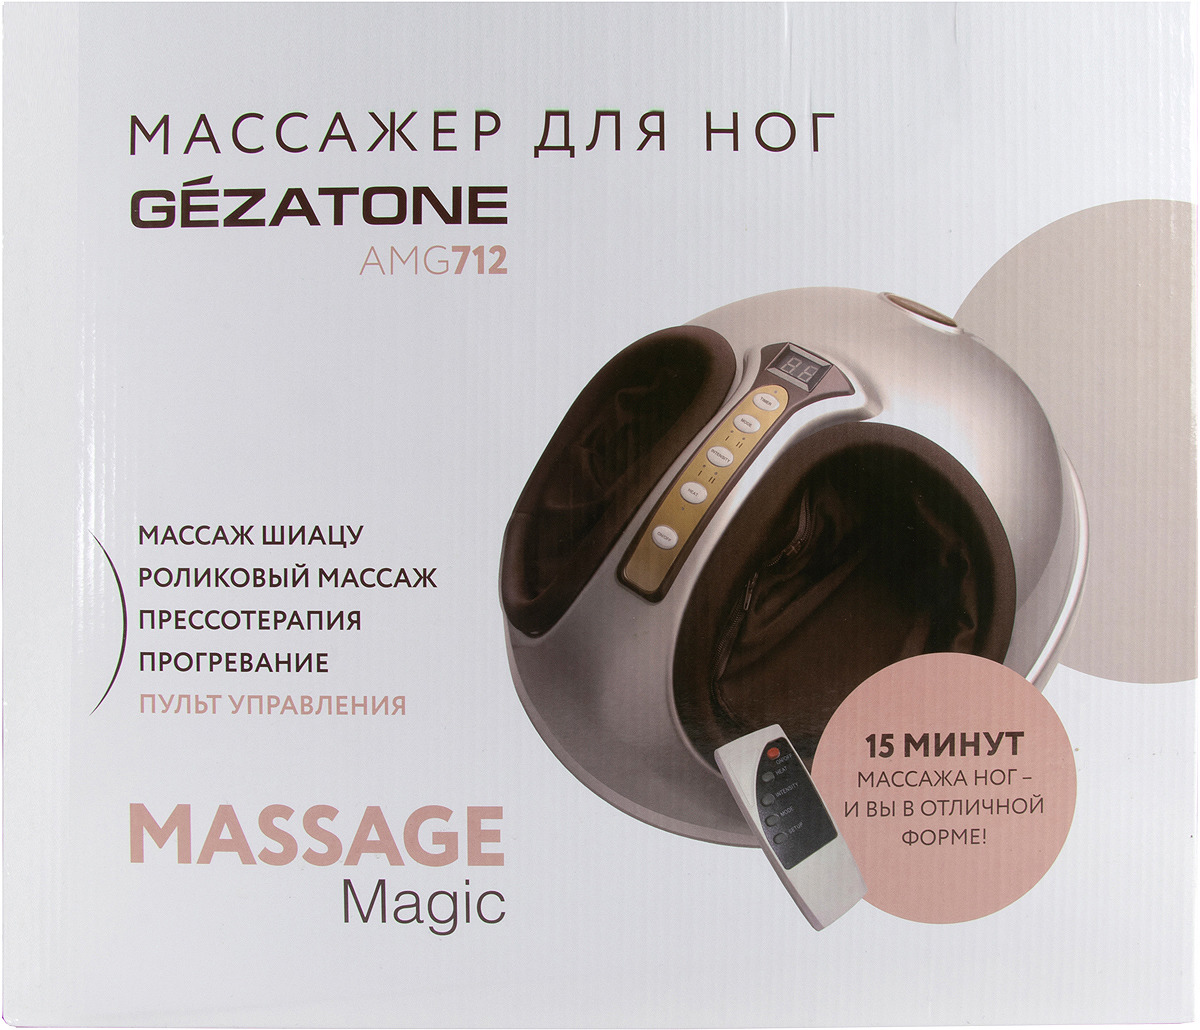 Massage magic. Gezatone amg712. Массажер для ног электрический "massage Magic Graphite" amg714 Gezatone. Massage Magic AMG 712. Массажёр для ног блаженство инструкция по применению.